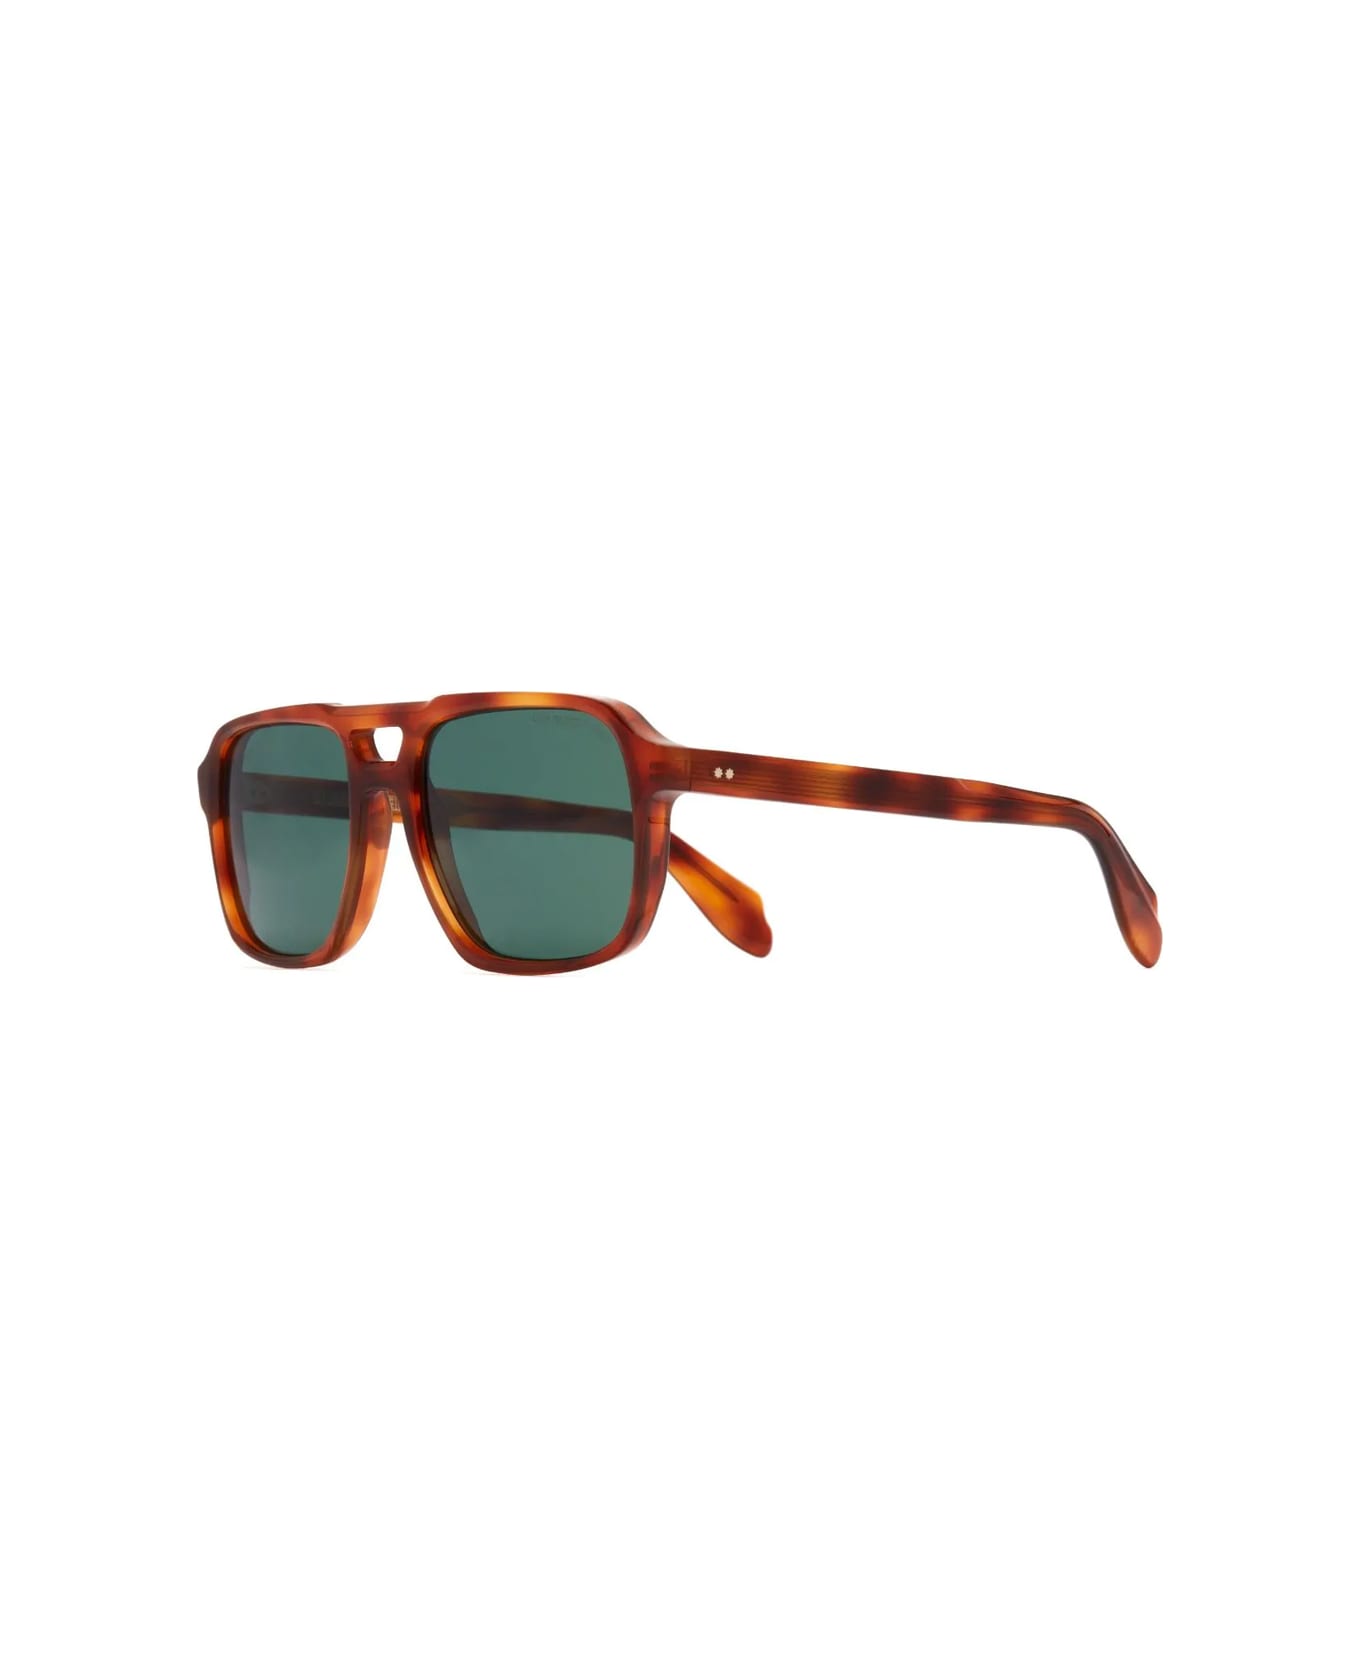 Cutler and Gross 1394 05 Sunglasses - Marrone